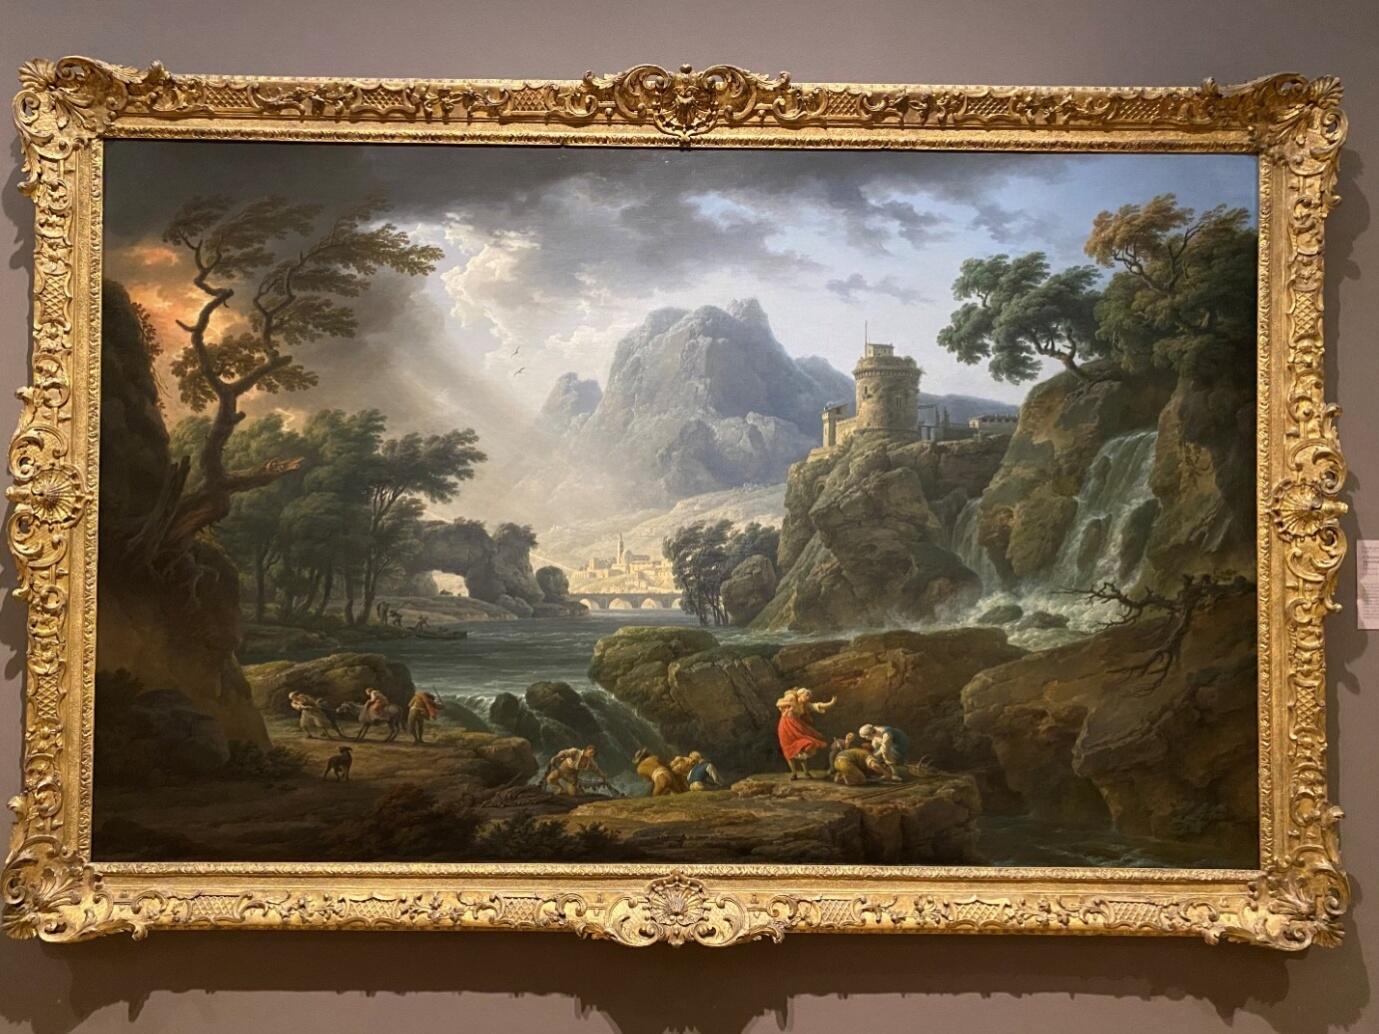 Claude-Joseph Vernet, A Mountain Landscape with an Approaching Storm, ca.1775.